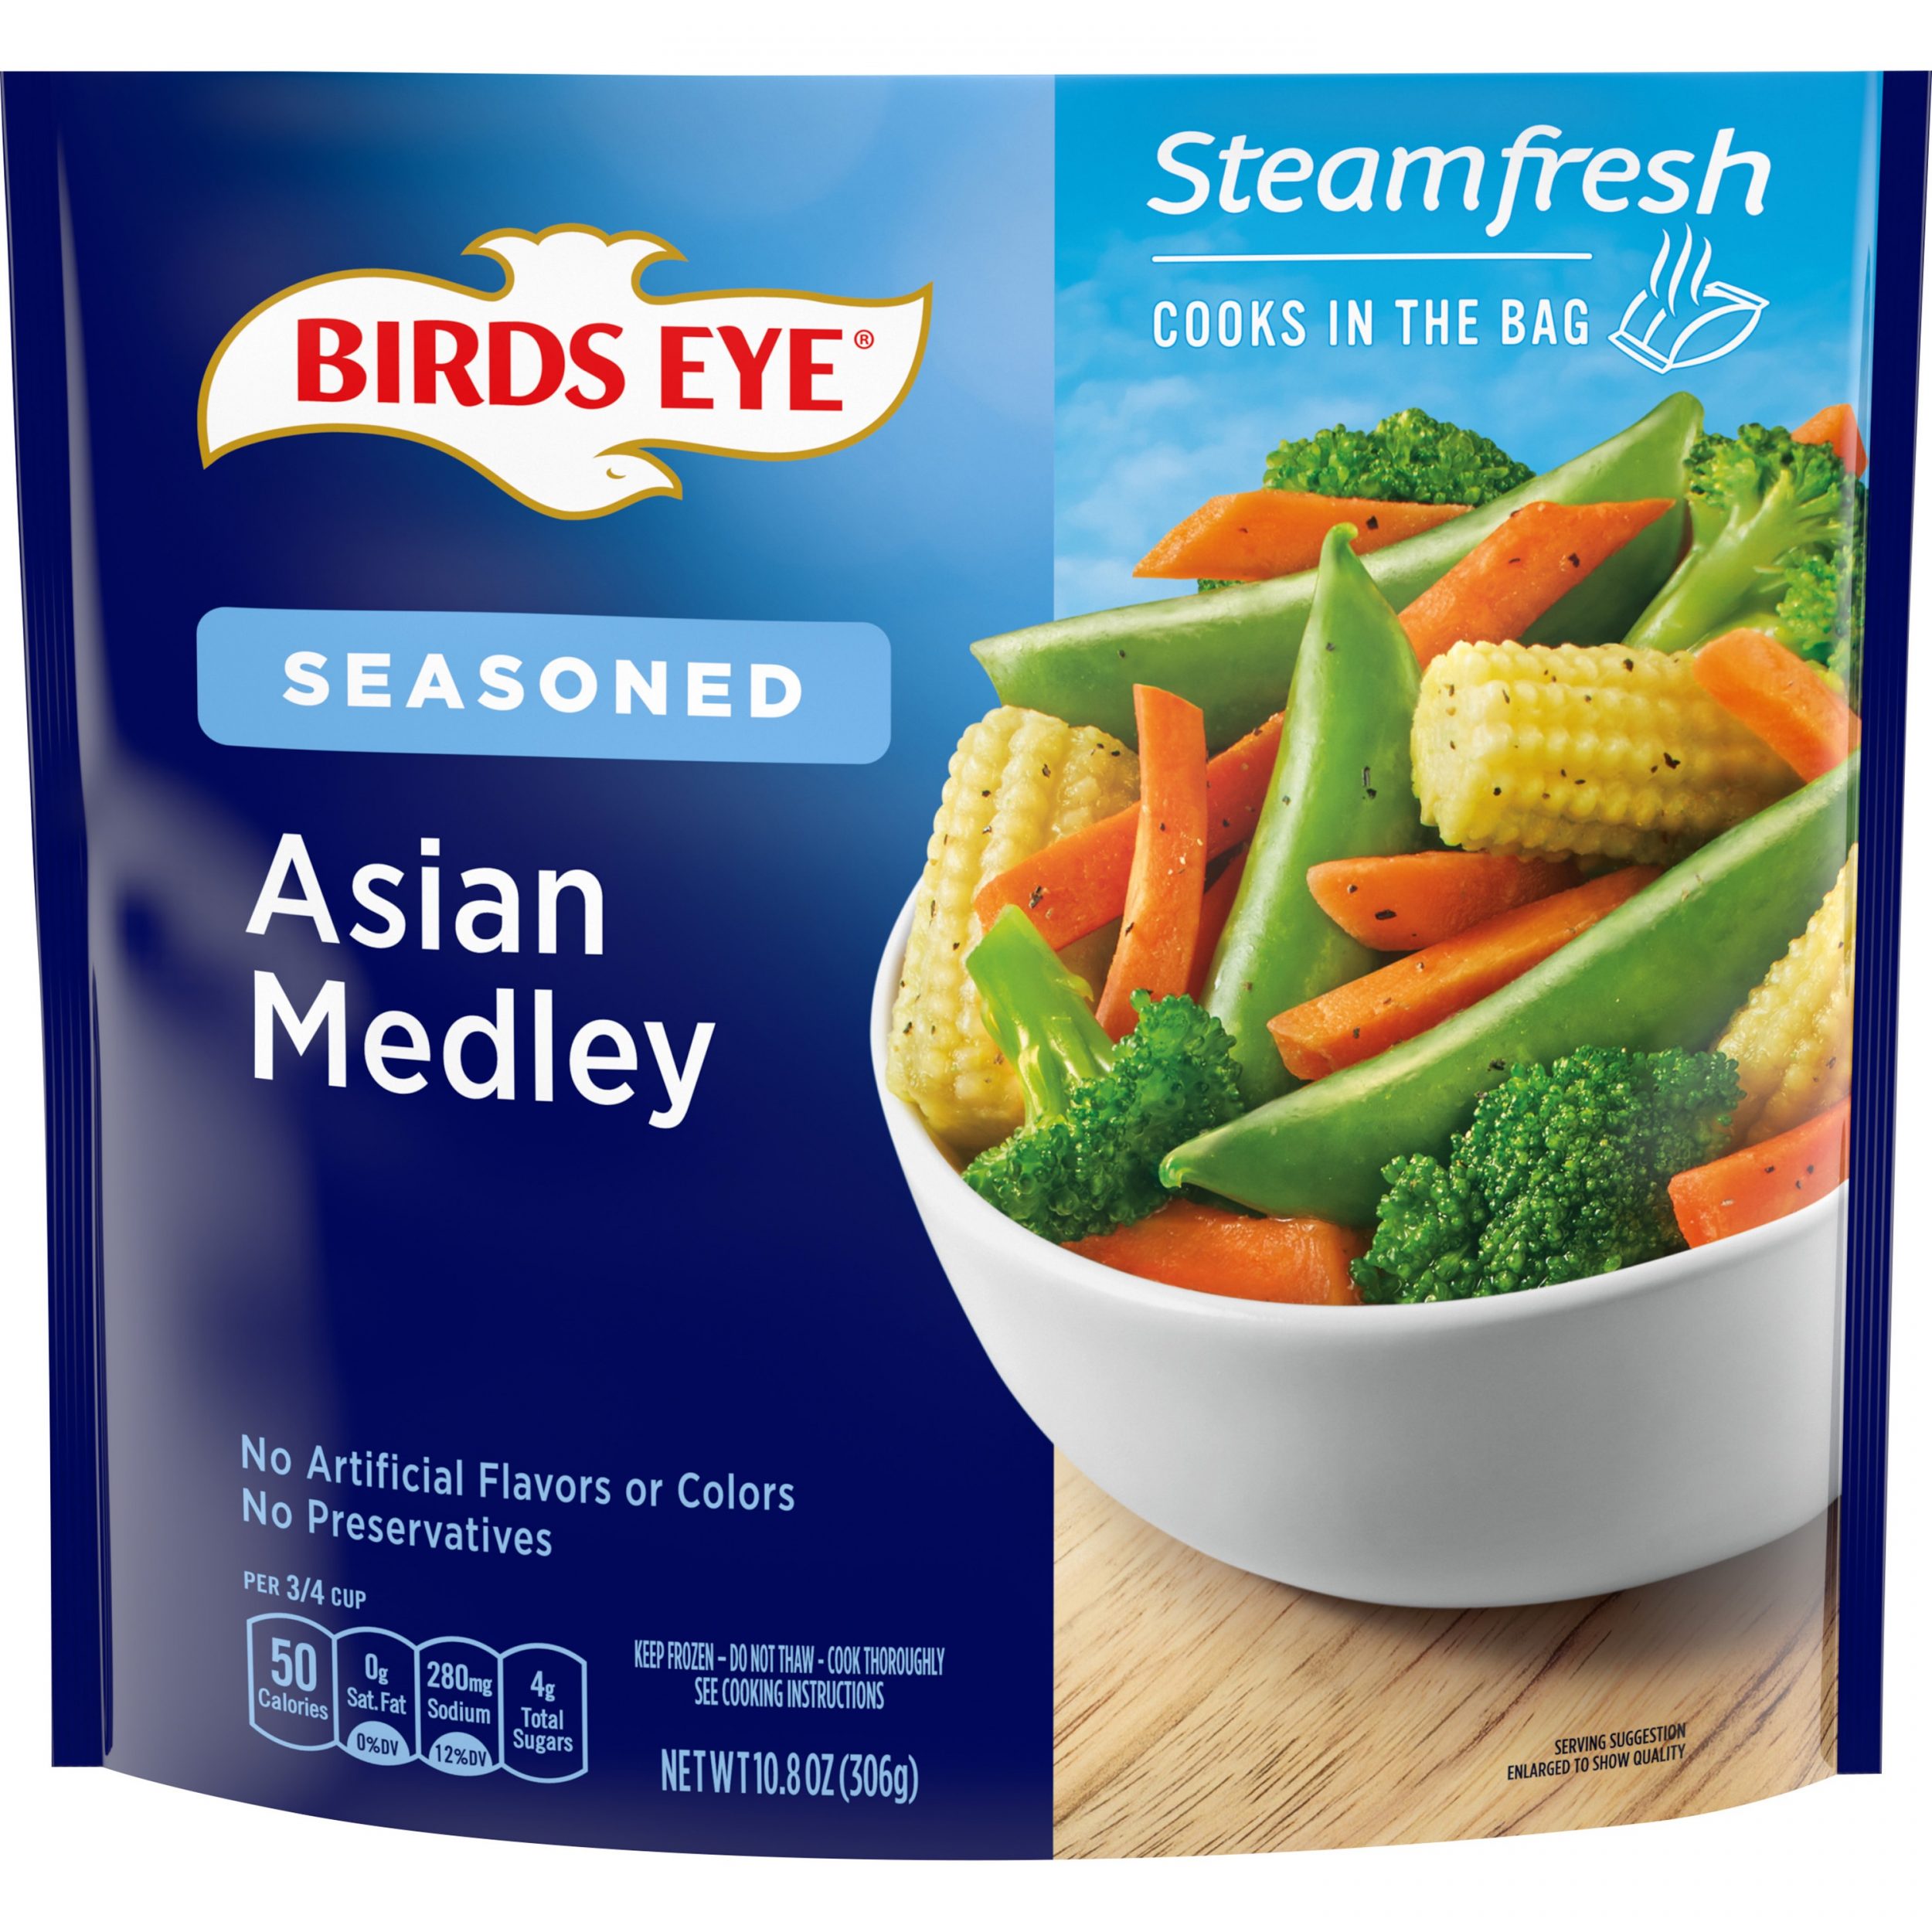 Birds Eye Steamfresh Chef’s Favorites Lightly Seasoned Asian Medley